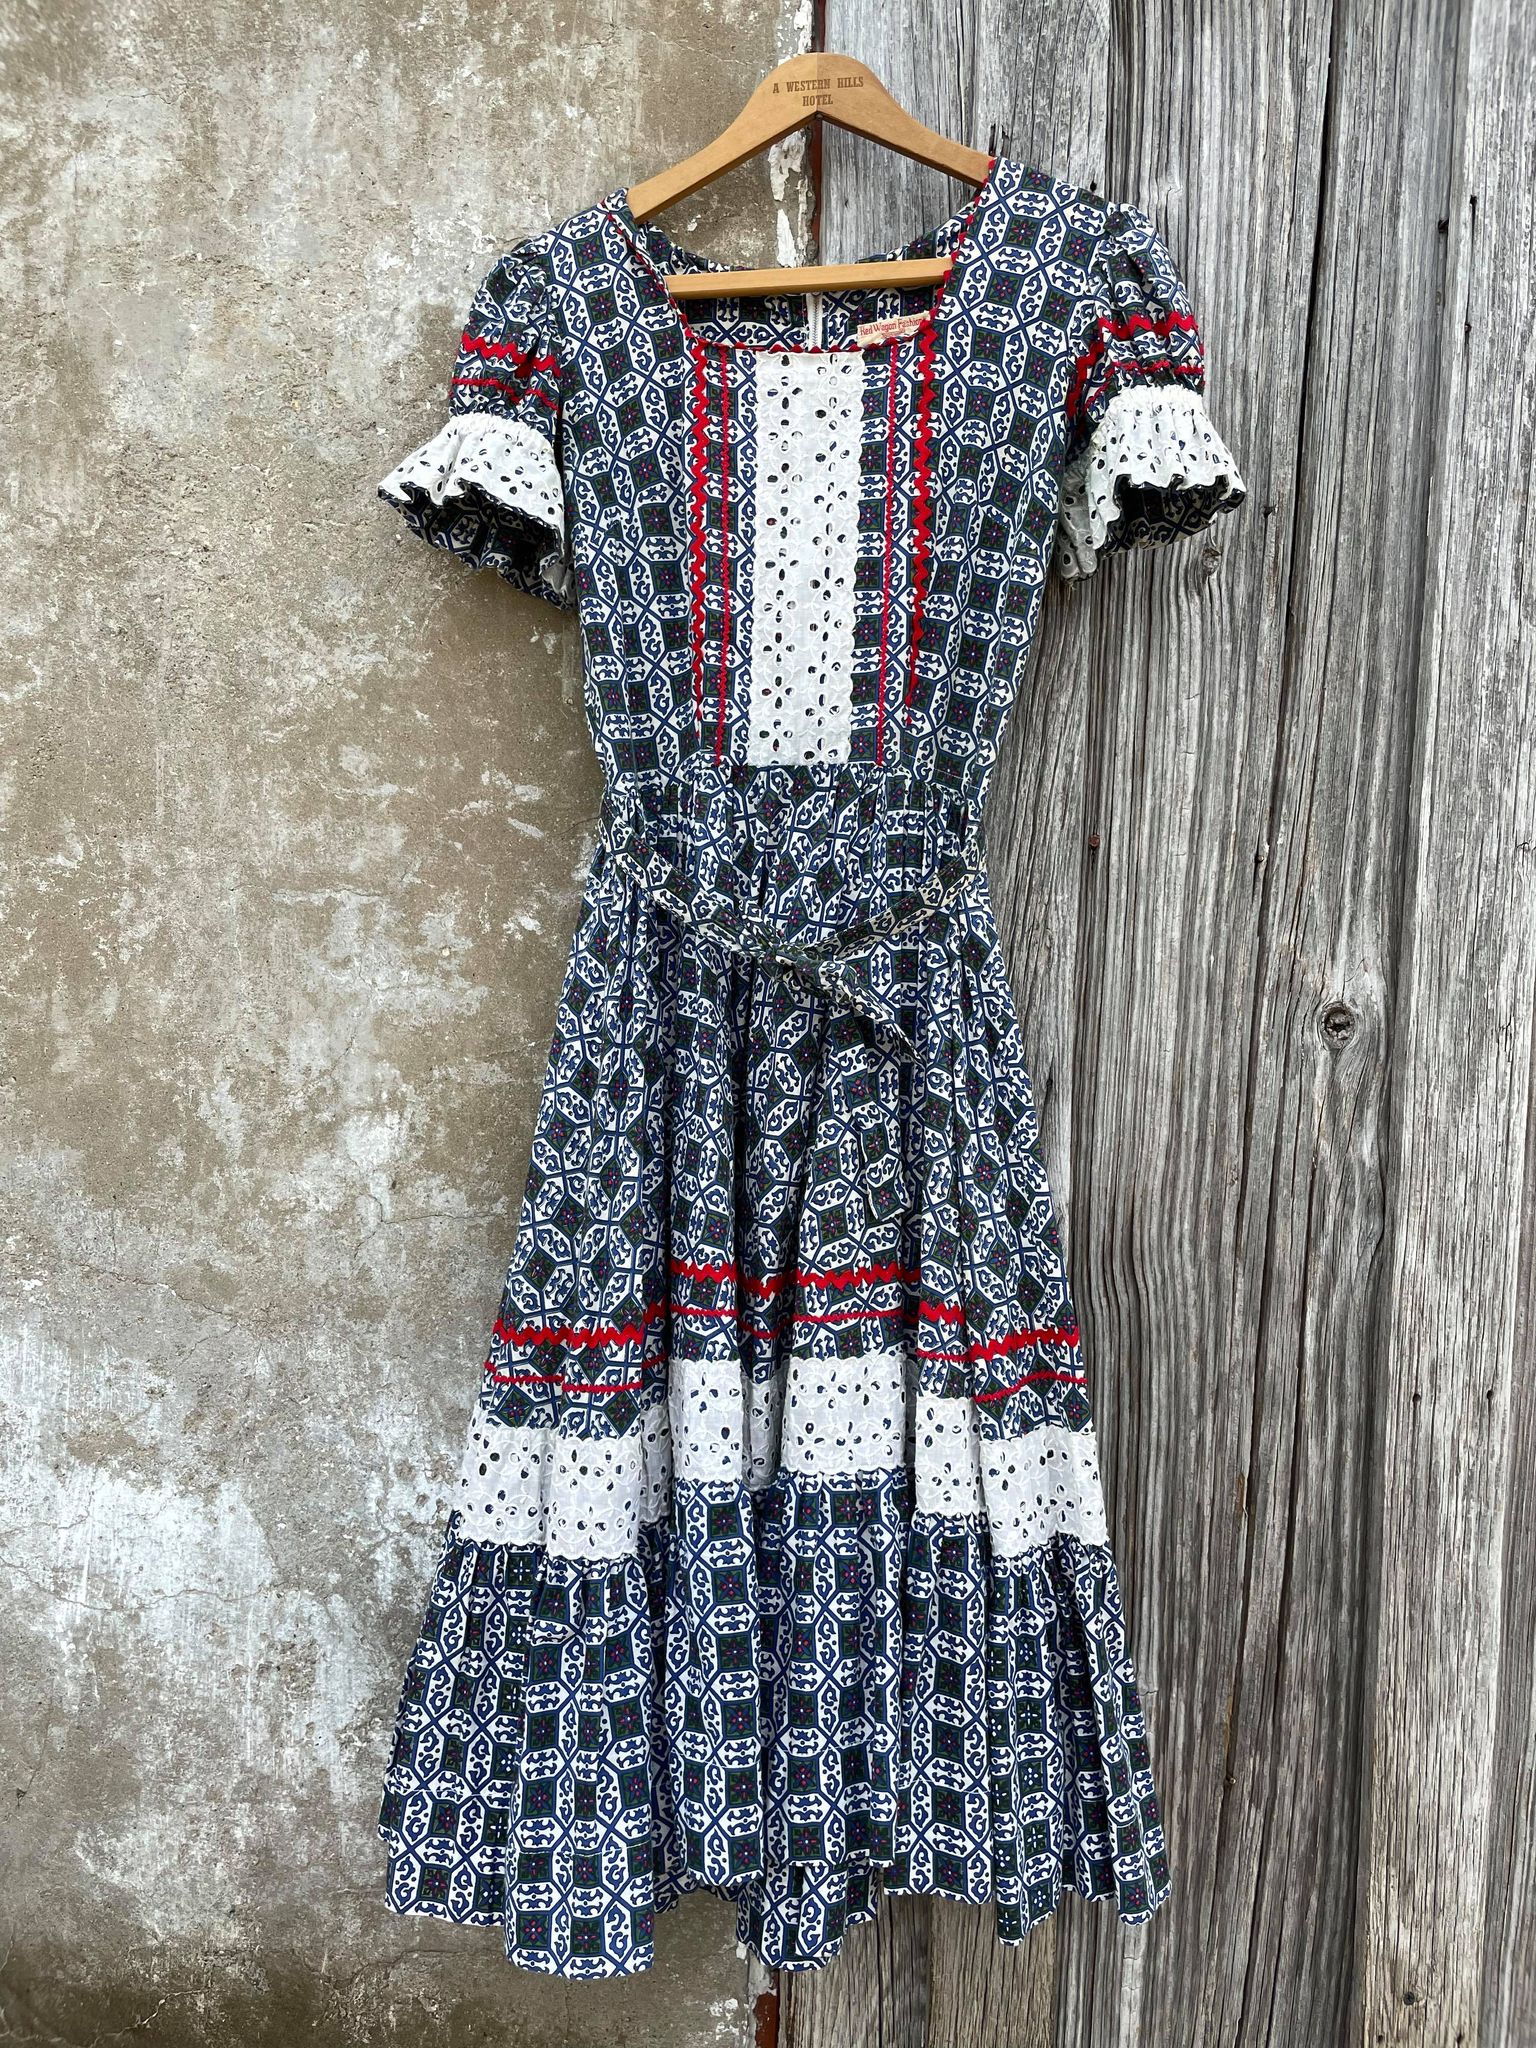 1950's Cotton Dress